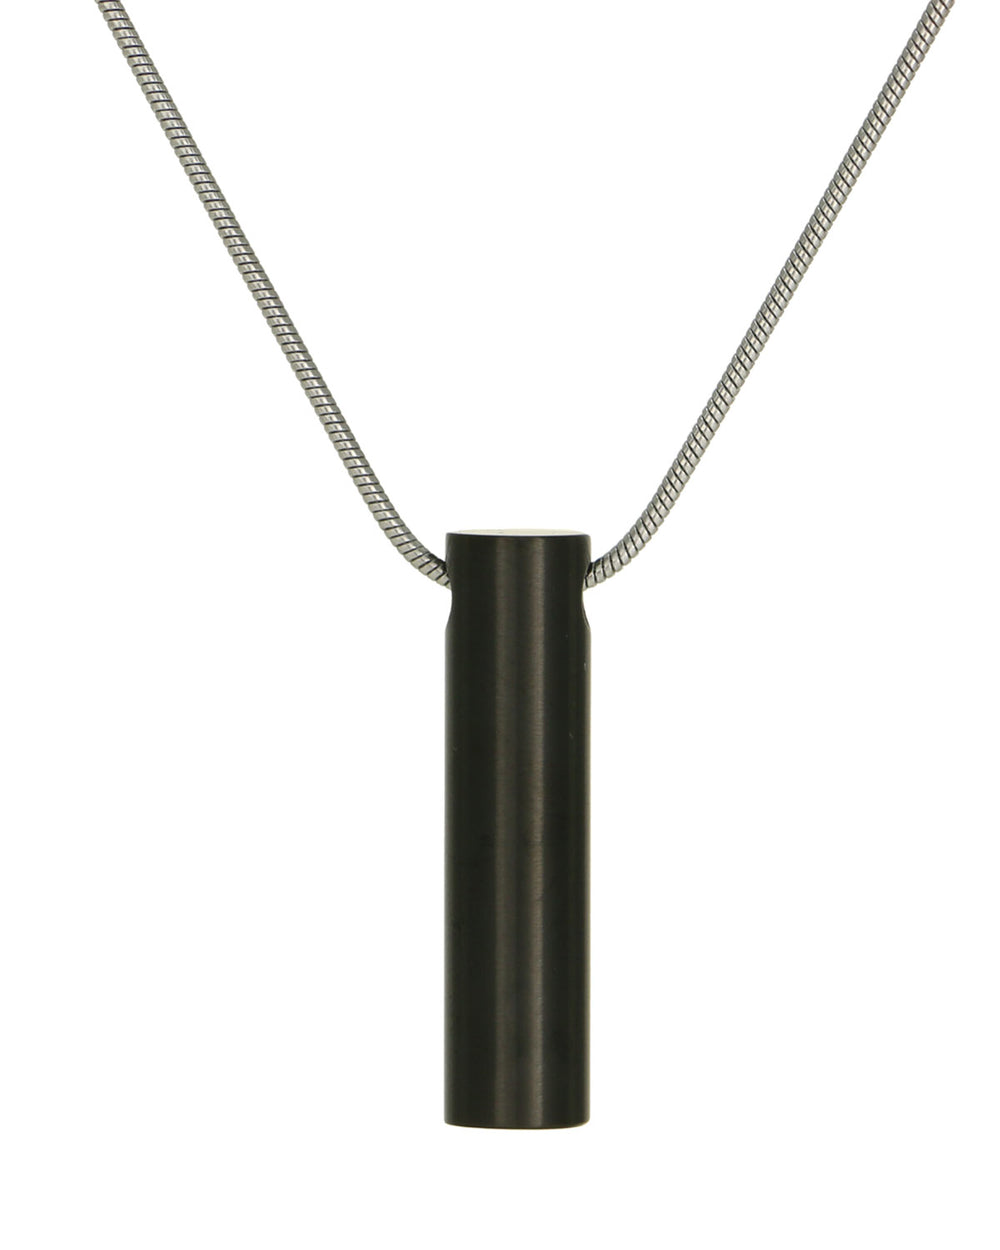 Cylinder Jewelry Pendant - Onyx